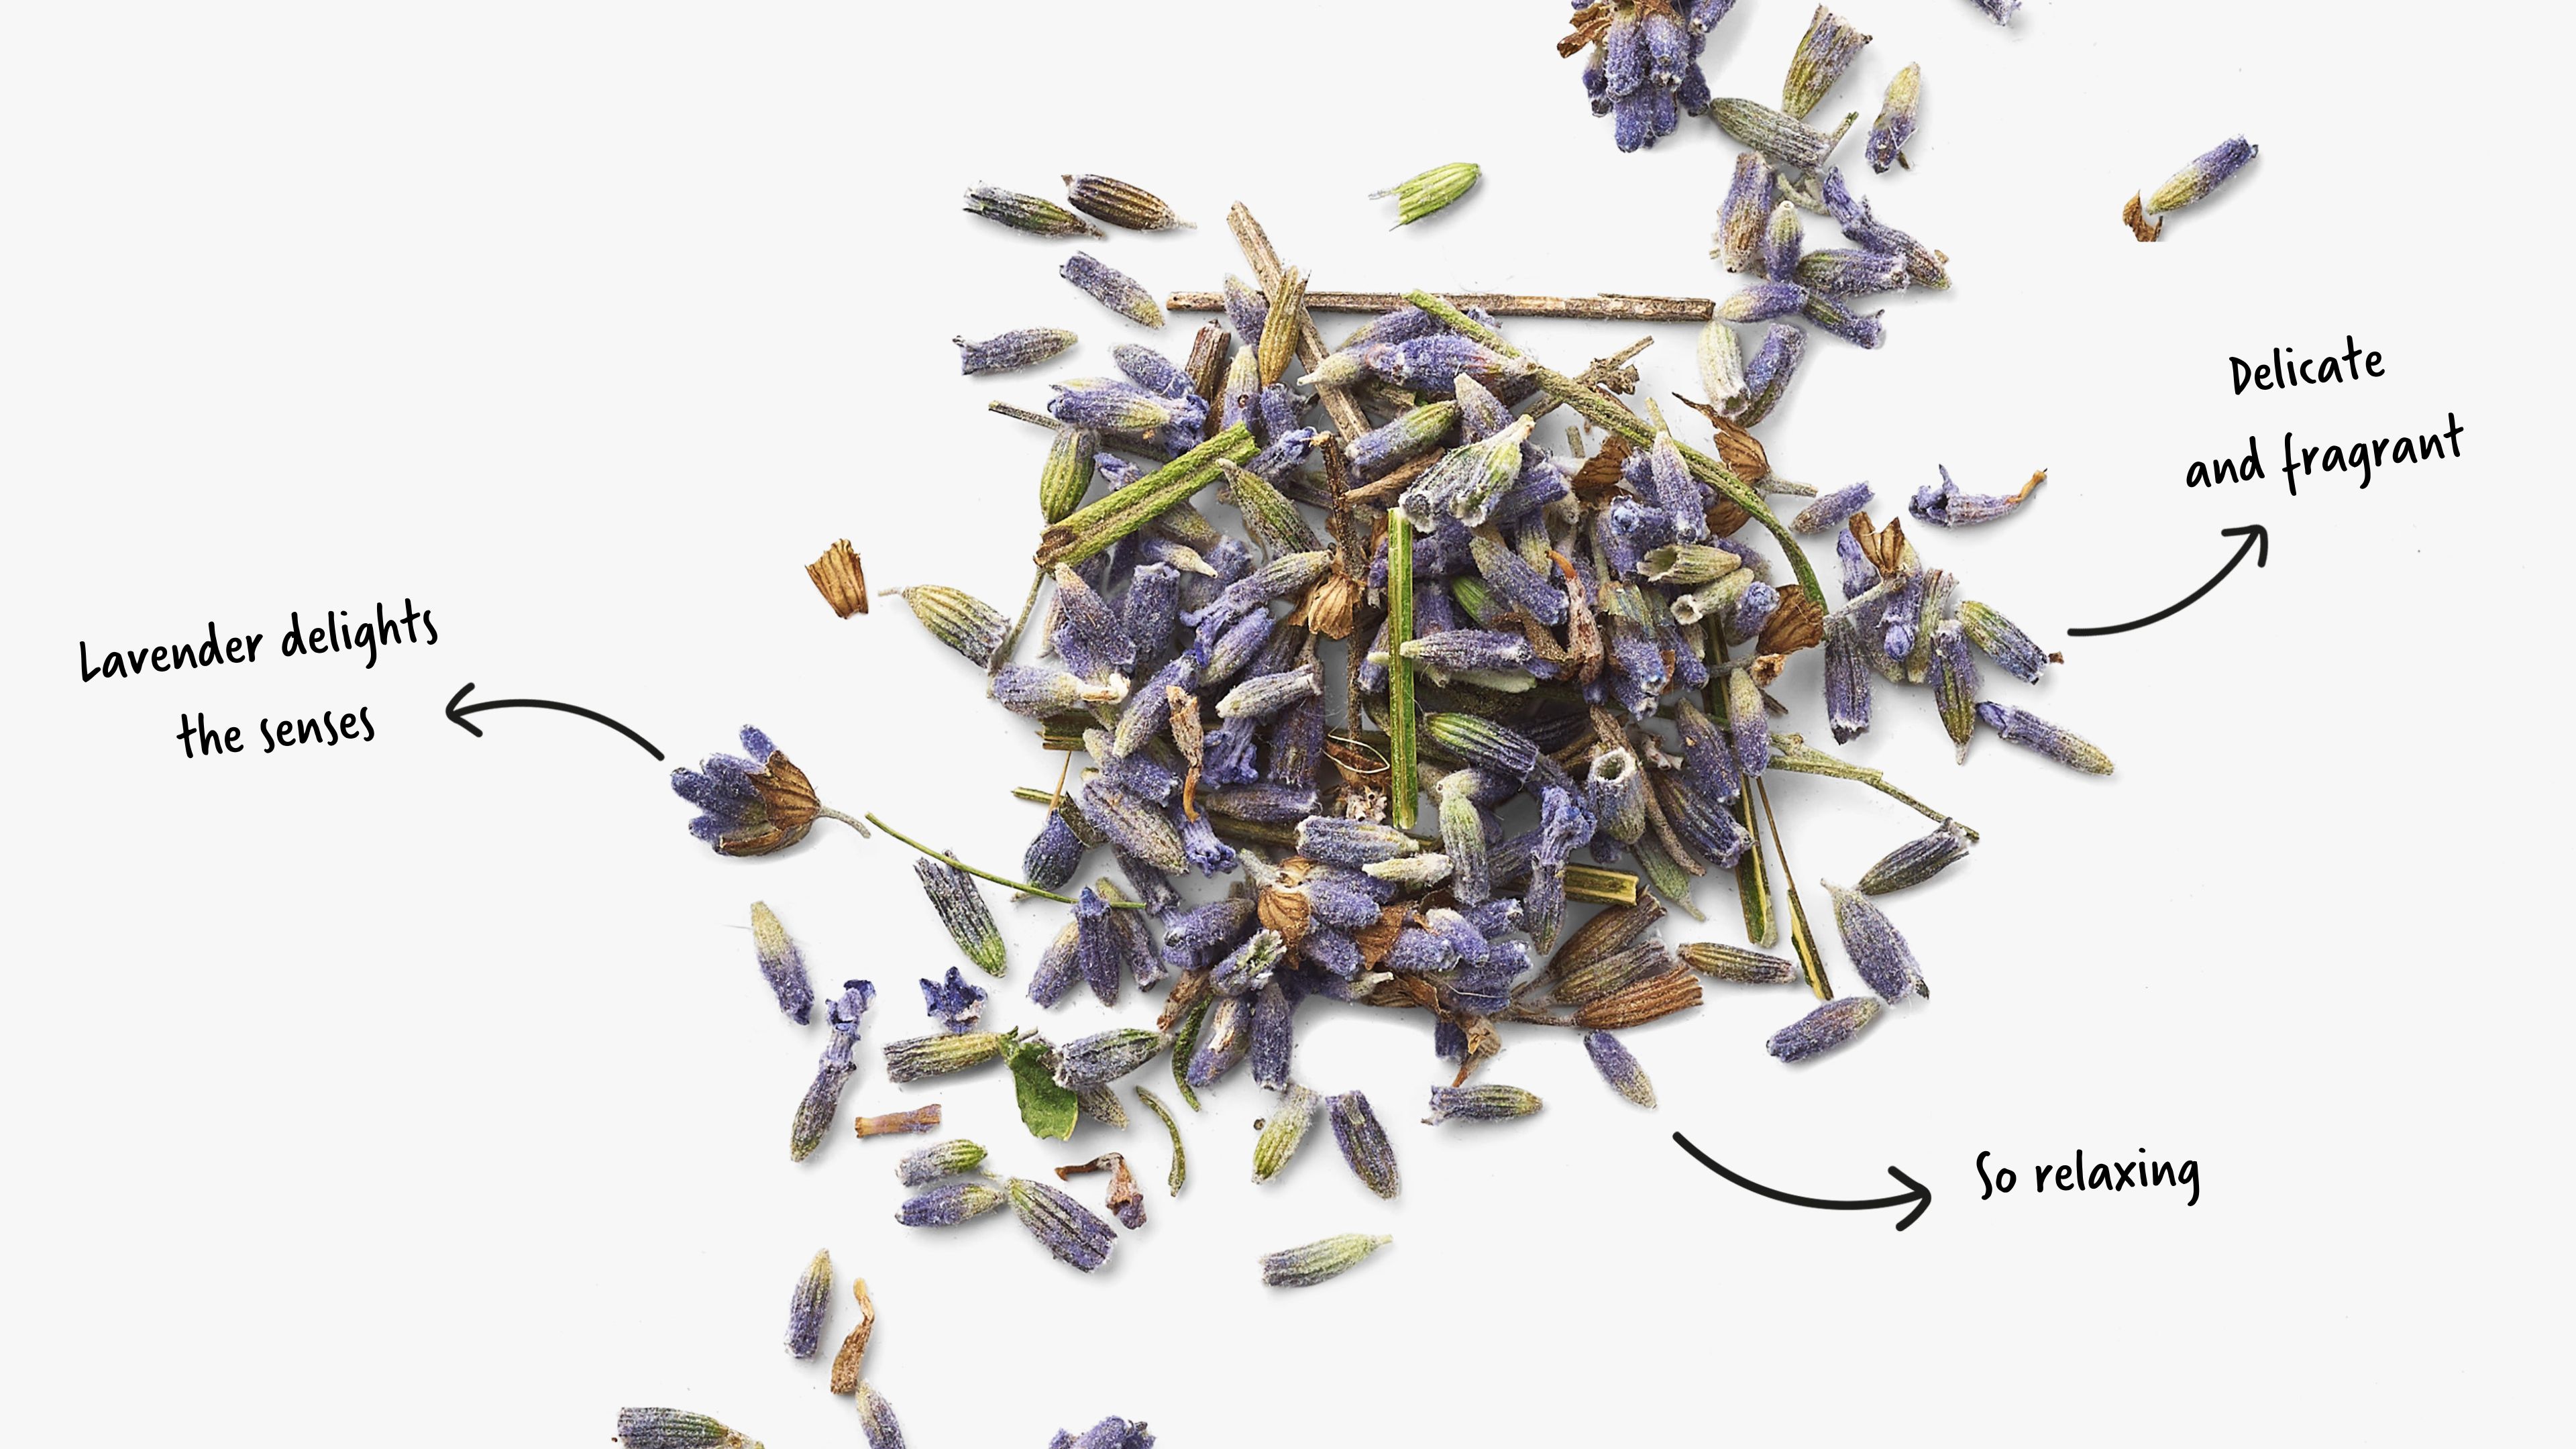 why drink lavender tea?